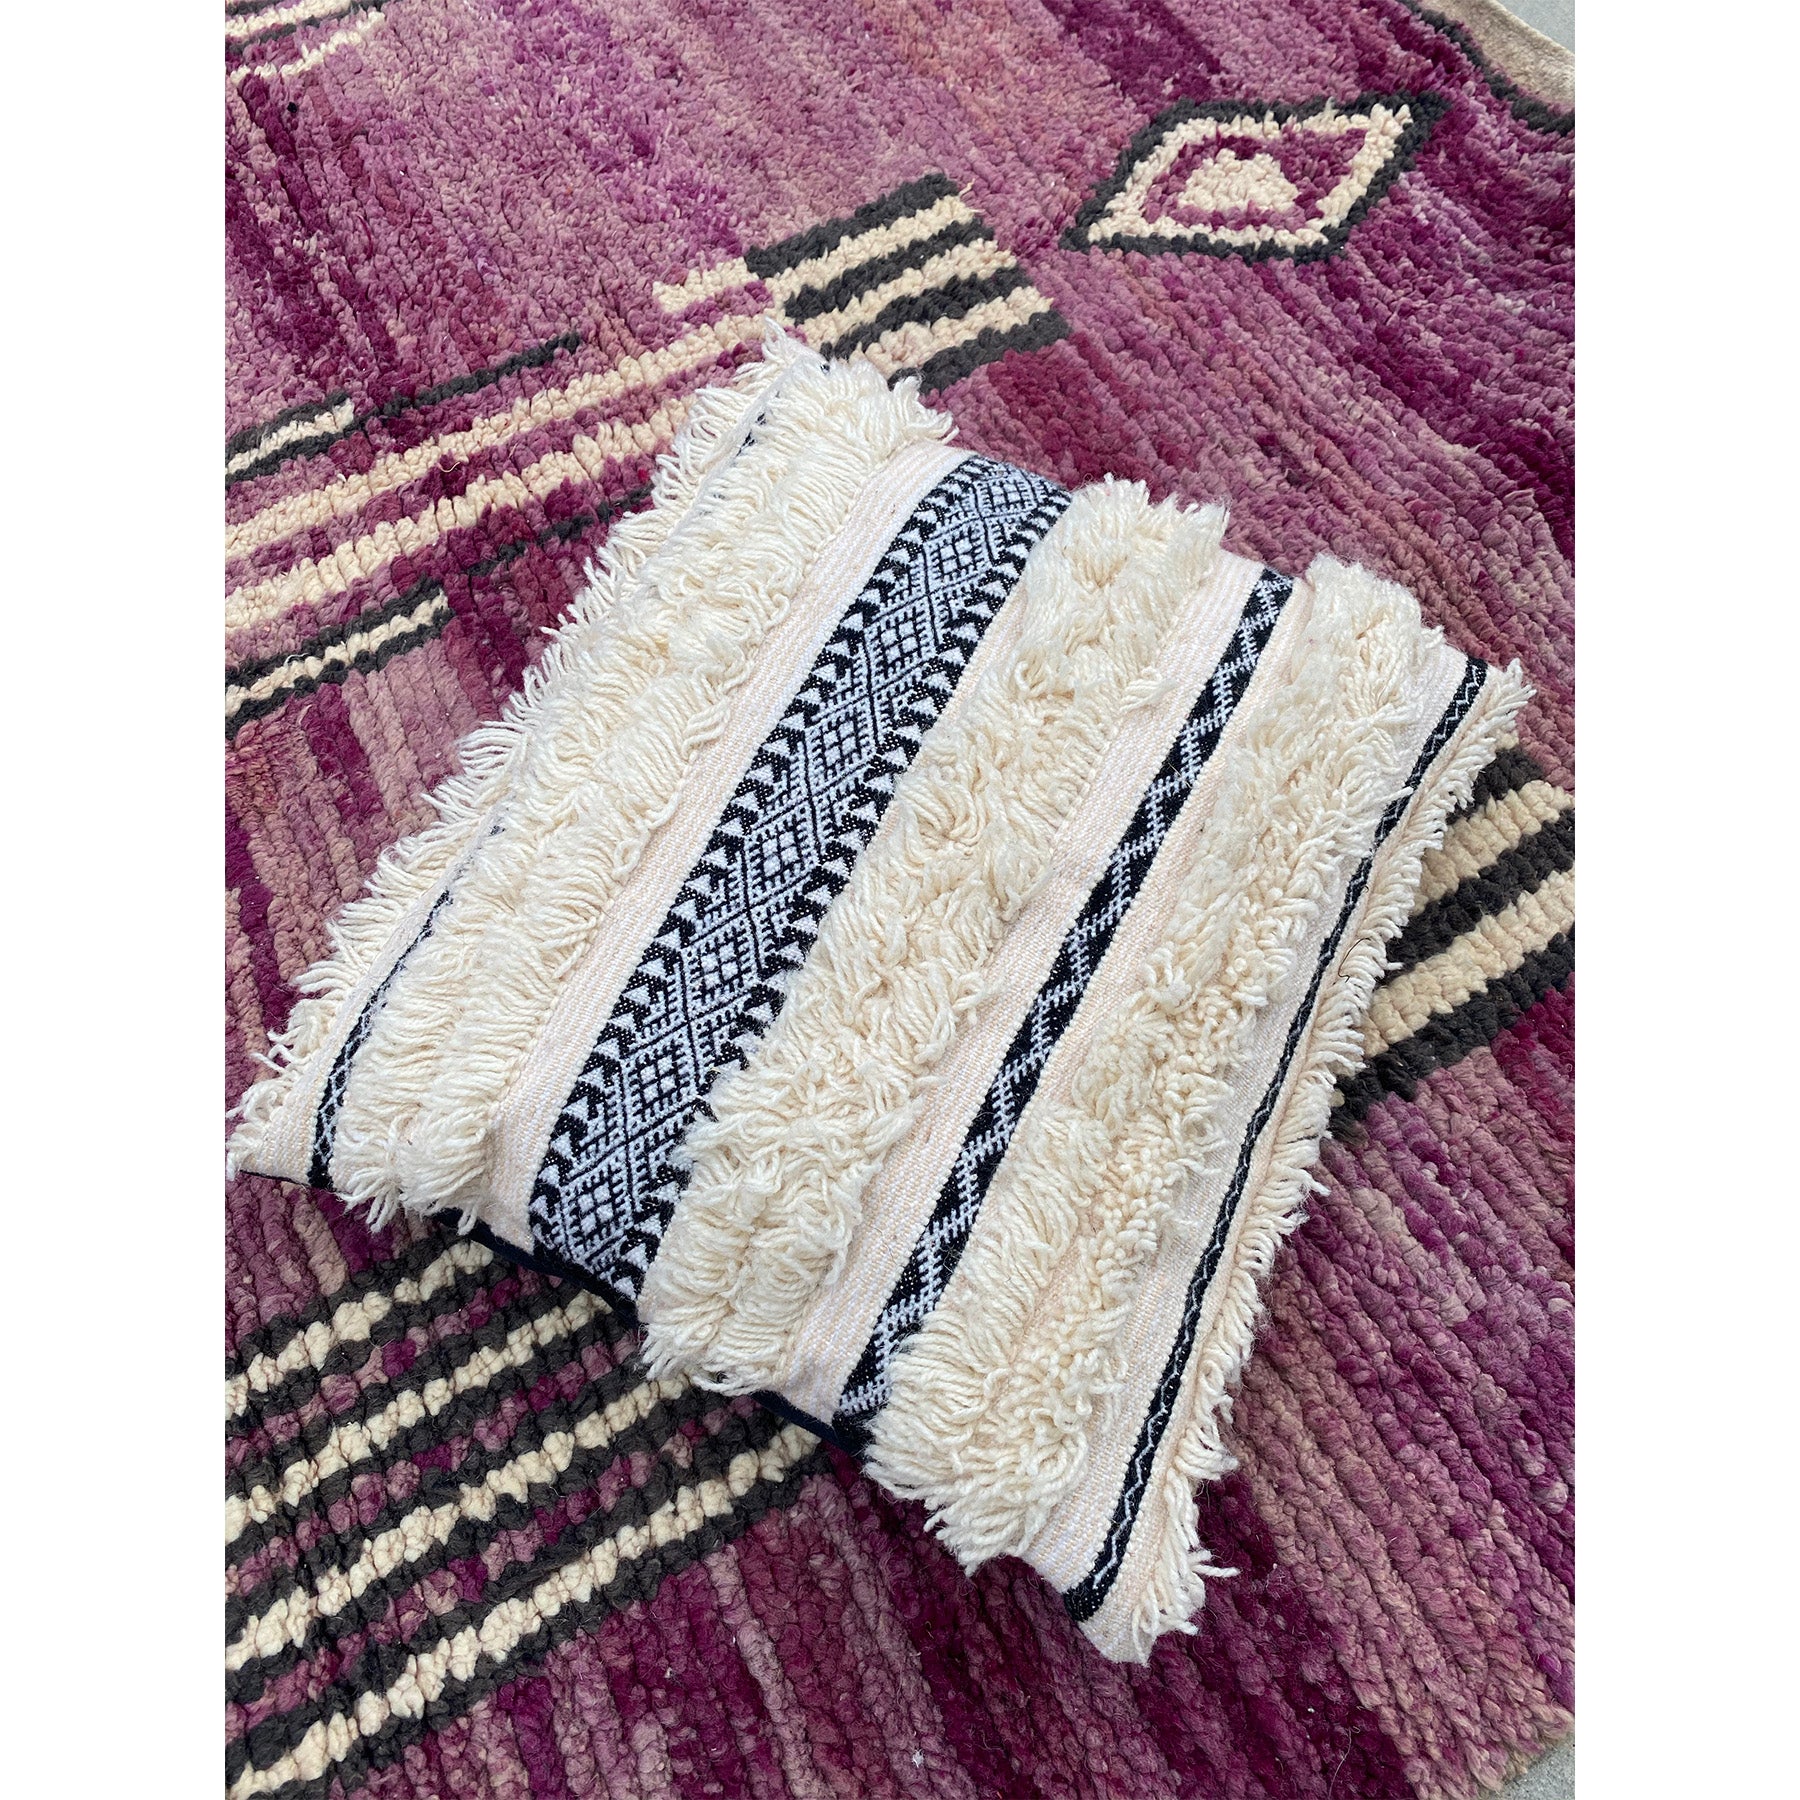 Moroccan pillow made from modern version of handira wedding blanket